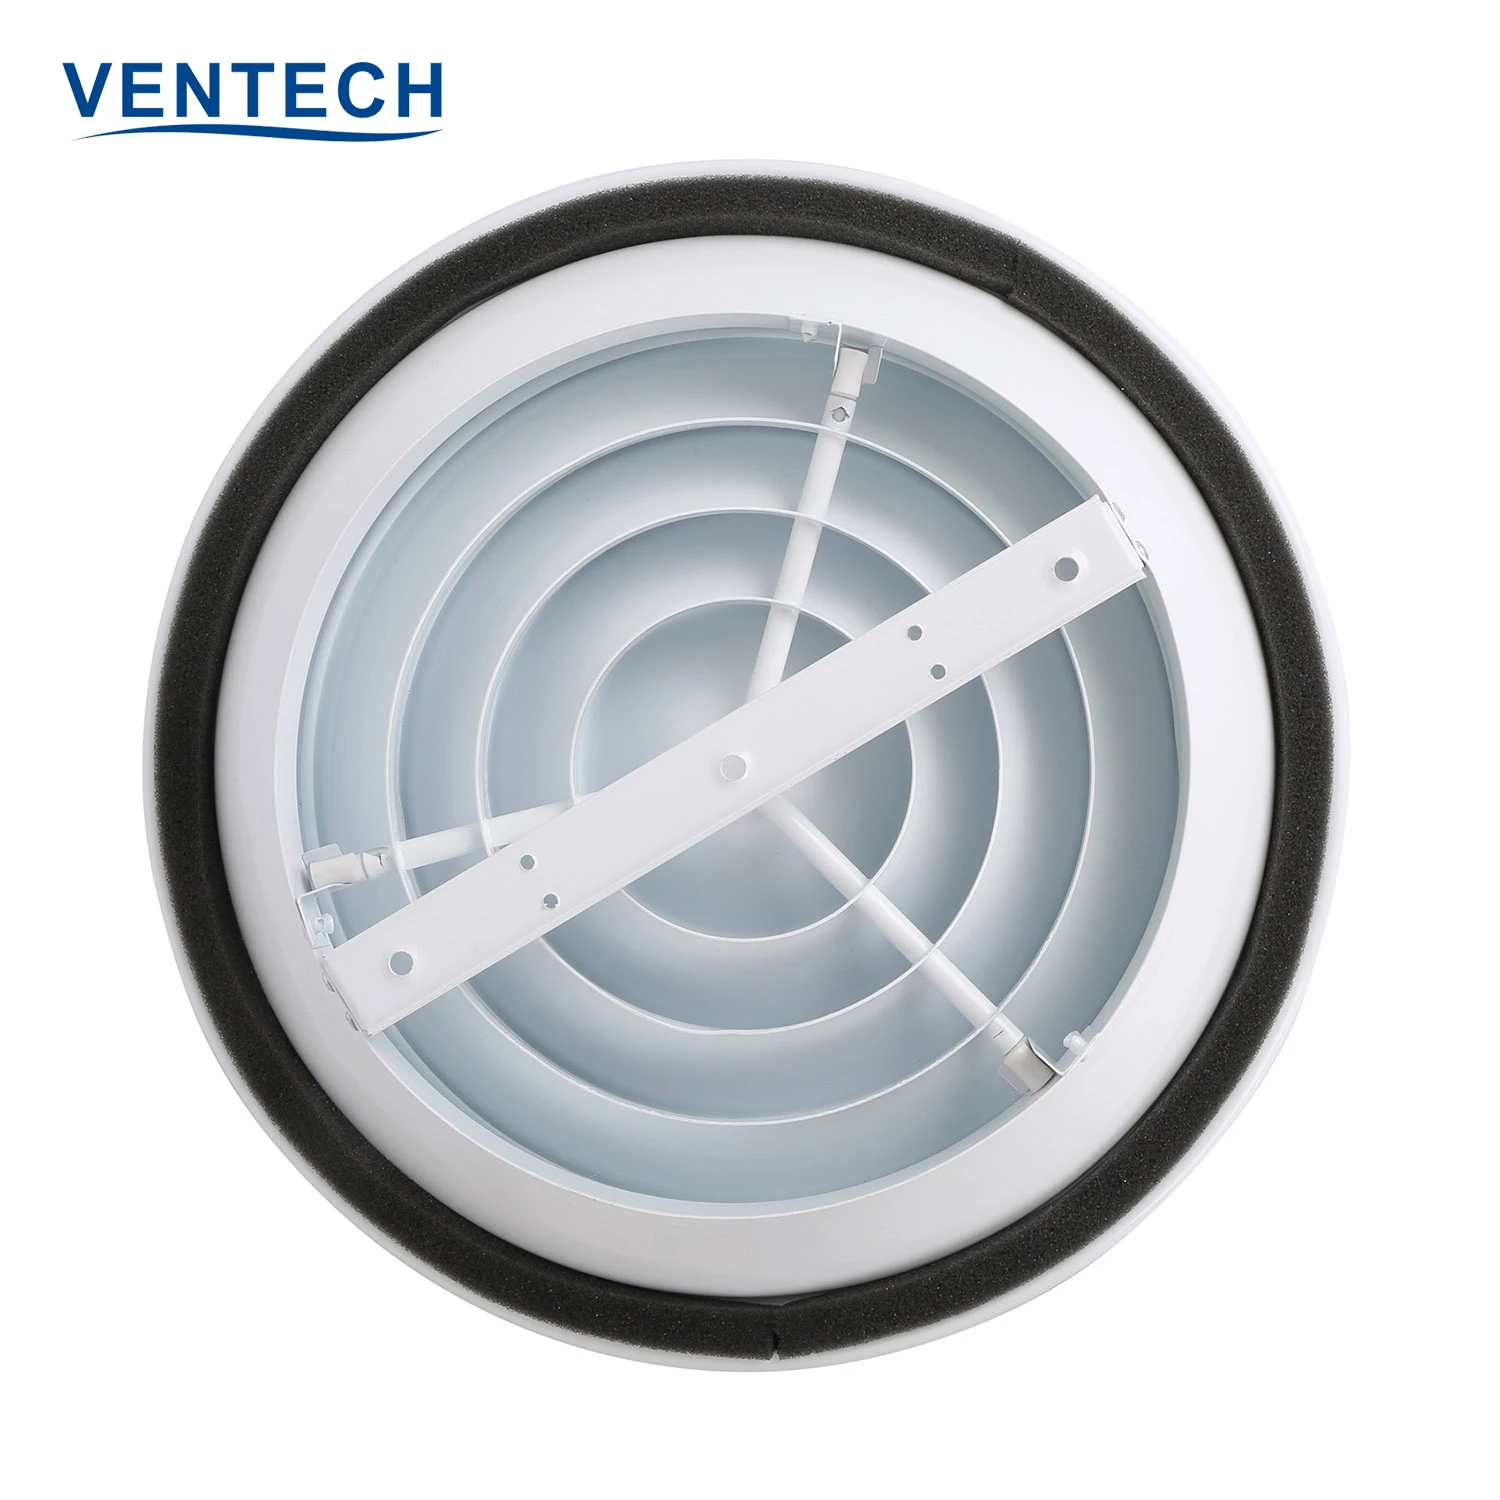 VENTECH Round Ceiling Diffuser HVAC Air Conditioning Steel Circular Return Air Grille